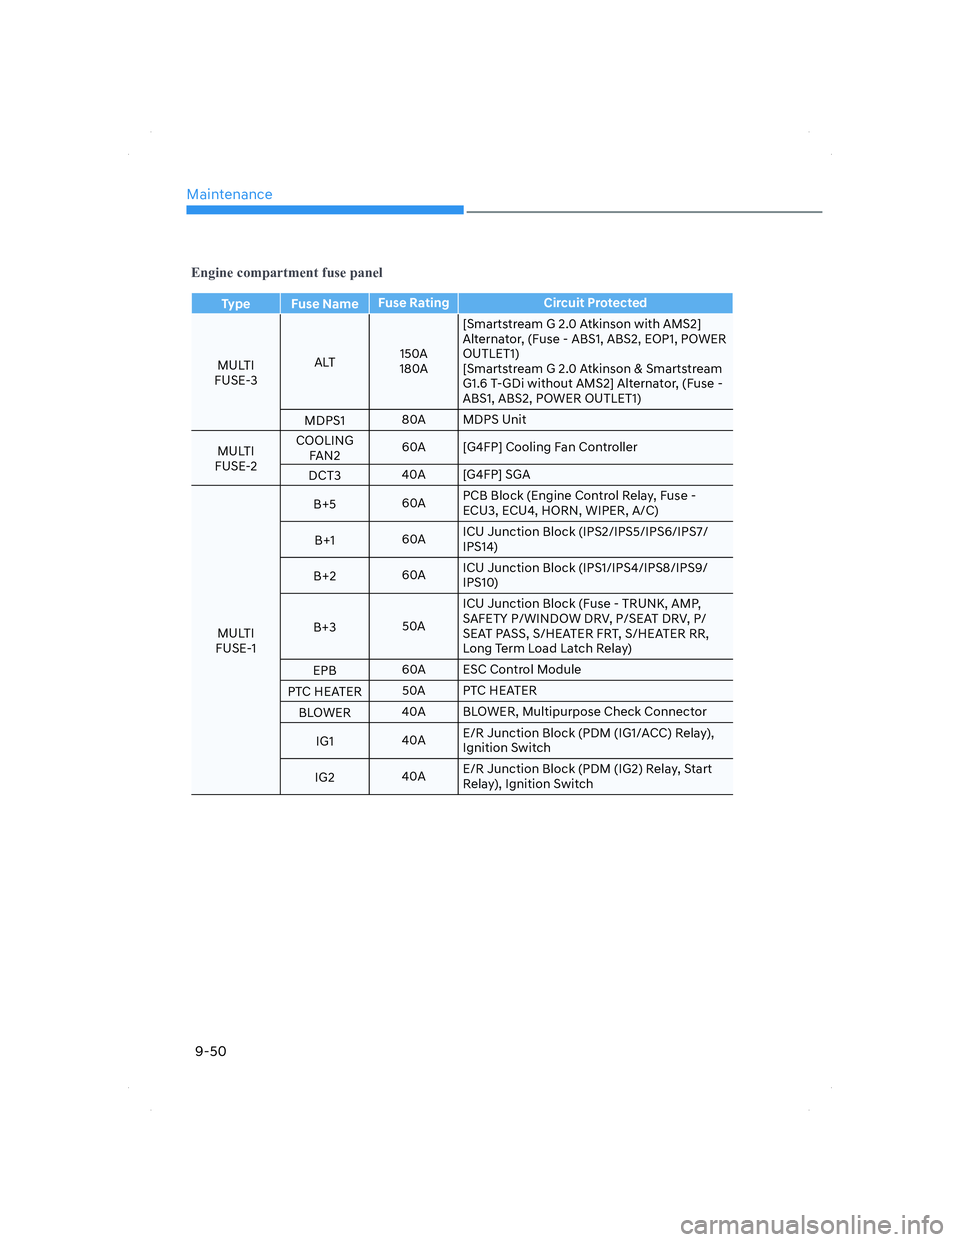 HYUNDAI ELANTRA 2022  Owners Manual Maintenance
9-50
�(�Q�J�L�Q�H��F�R�P�S�D�U�W�P�H�Q�W��I�X�V�H��S�D�Q�H�O
Type Fuse NameFuse Rating Circuit Protected
MULTI
FUSE-3ALT150A
180A[Smartstream G 2.0 Atkinson with AMS2] 
Alternator, (Fus